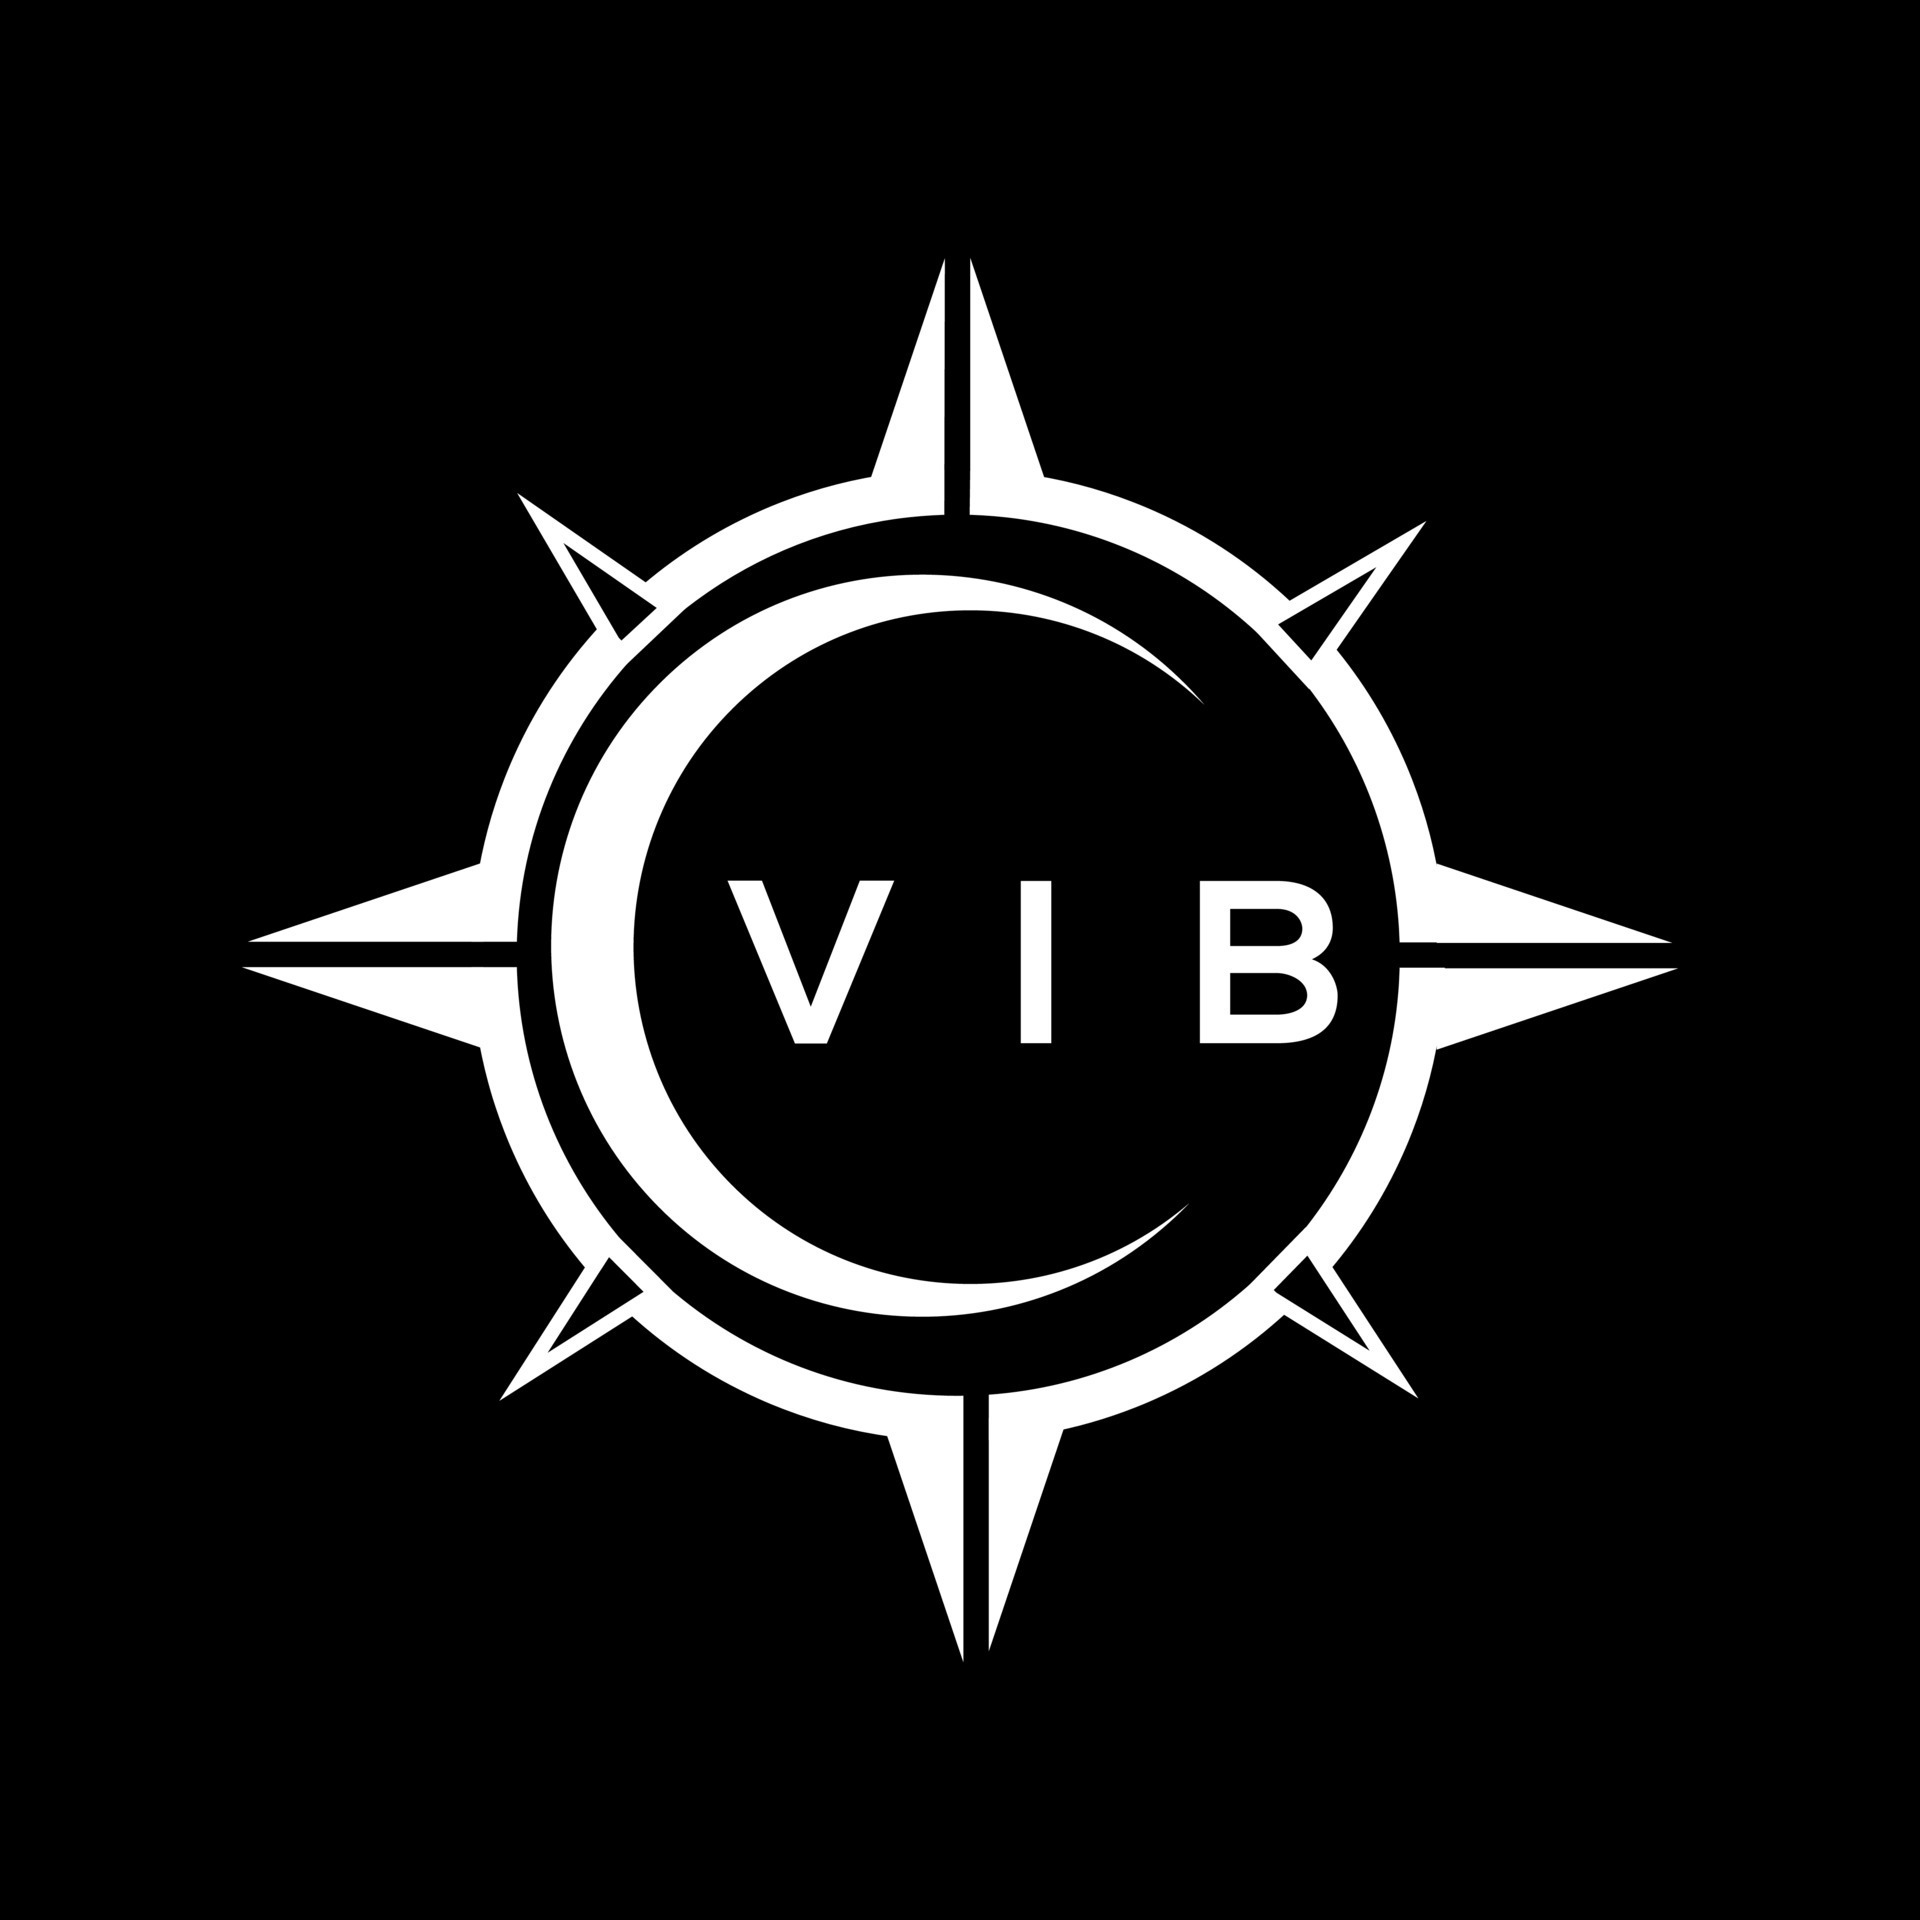 VIB abstract technology logo design on Black background. VIB